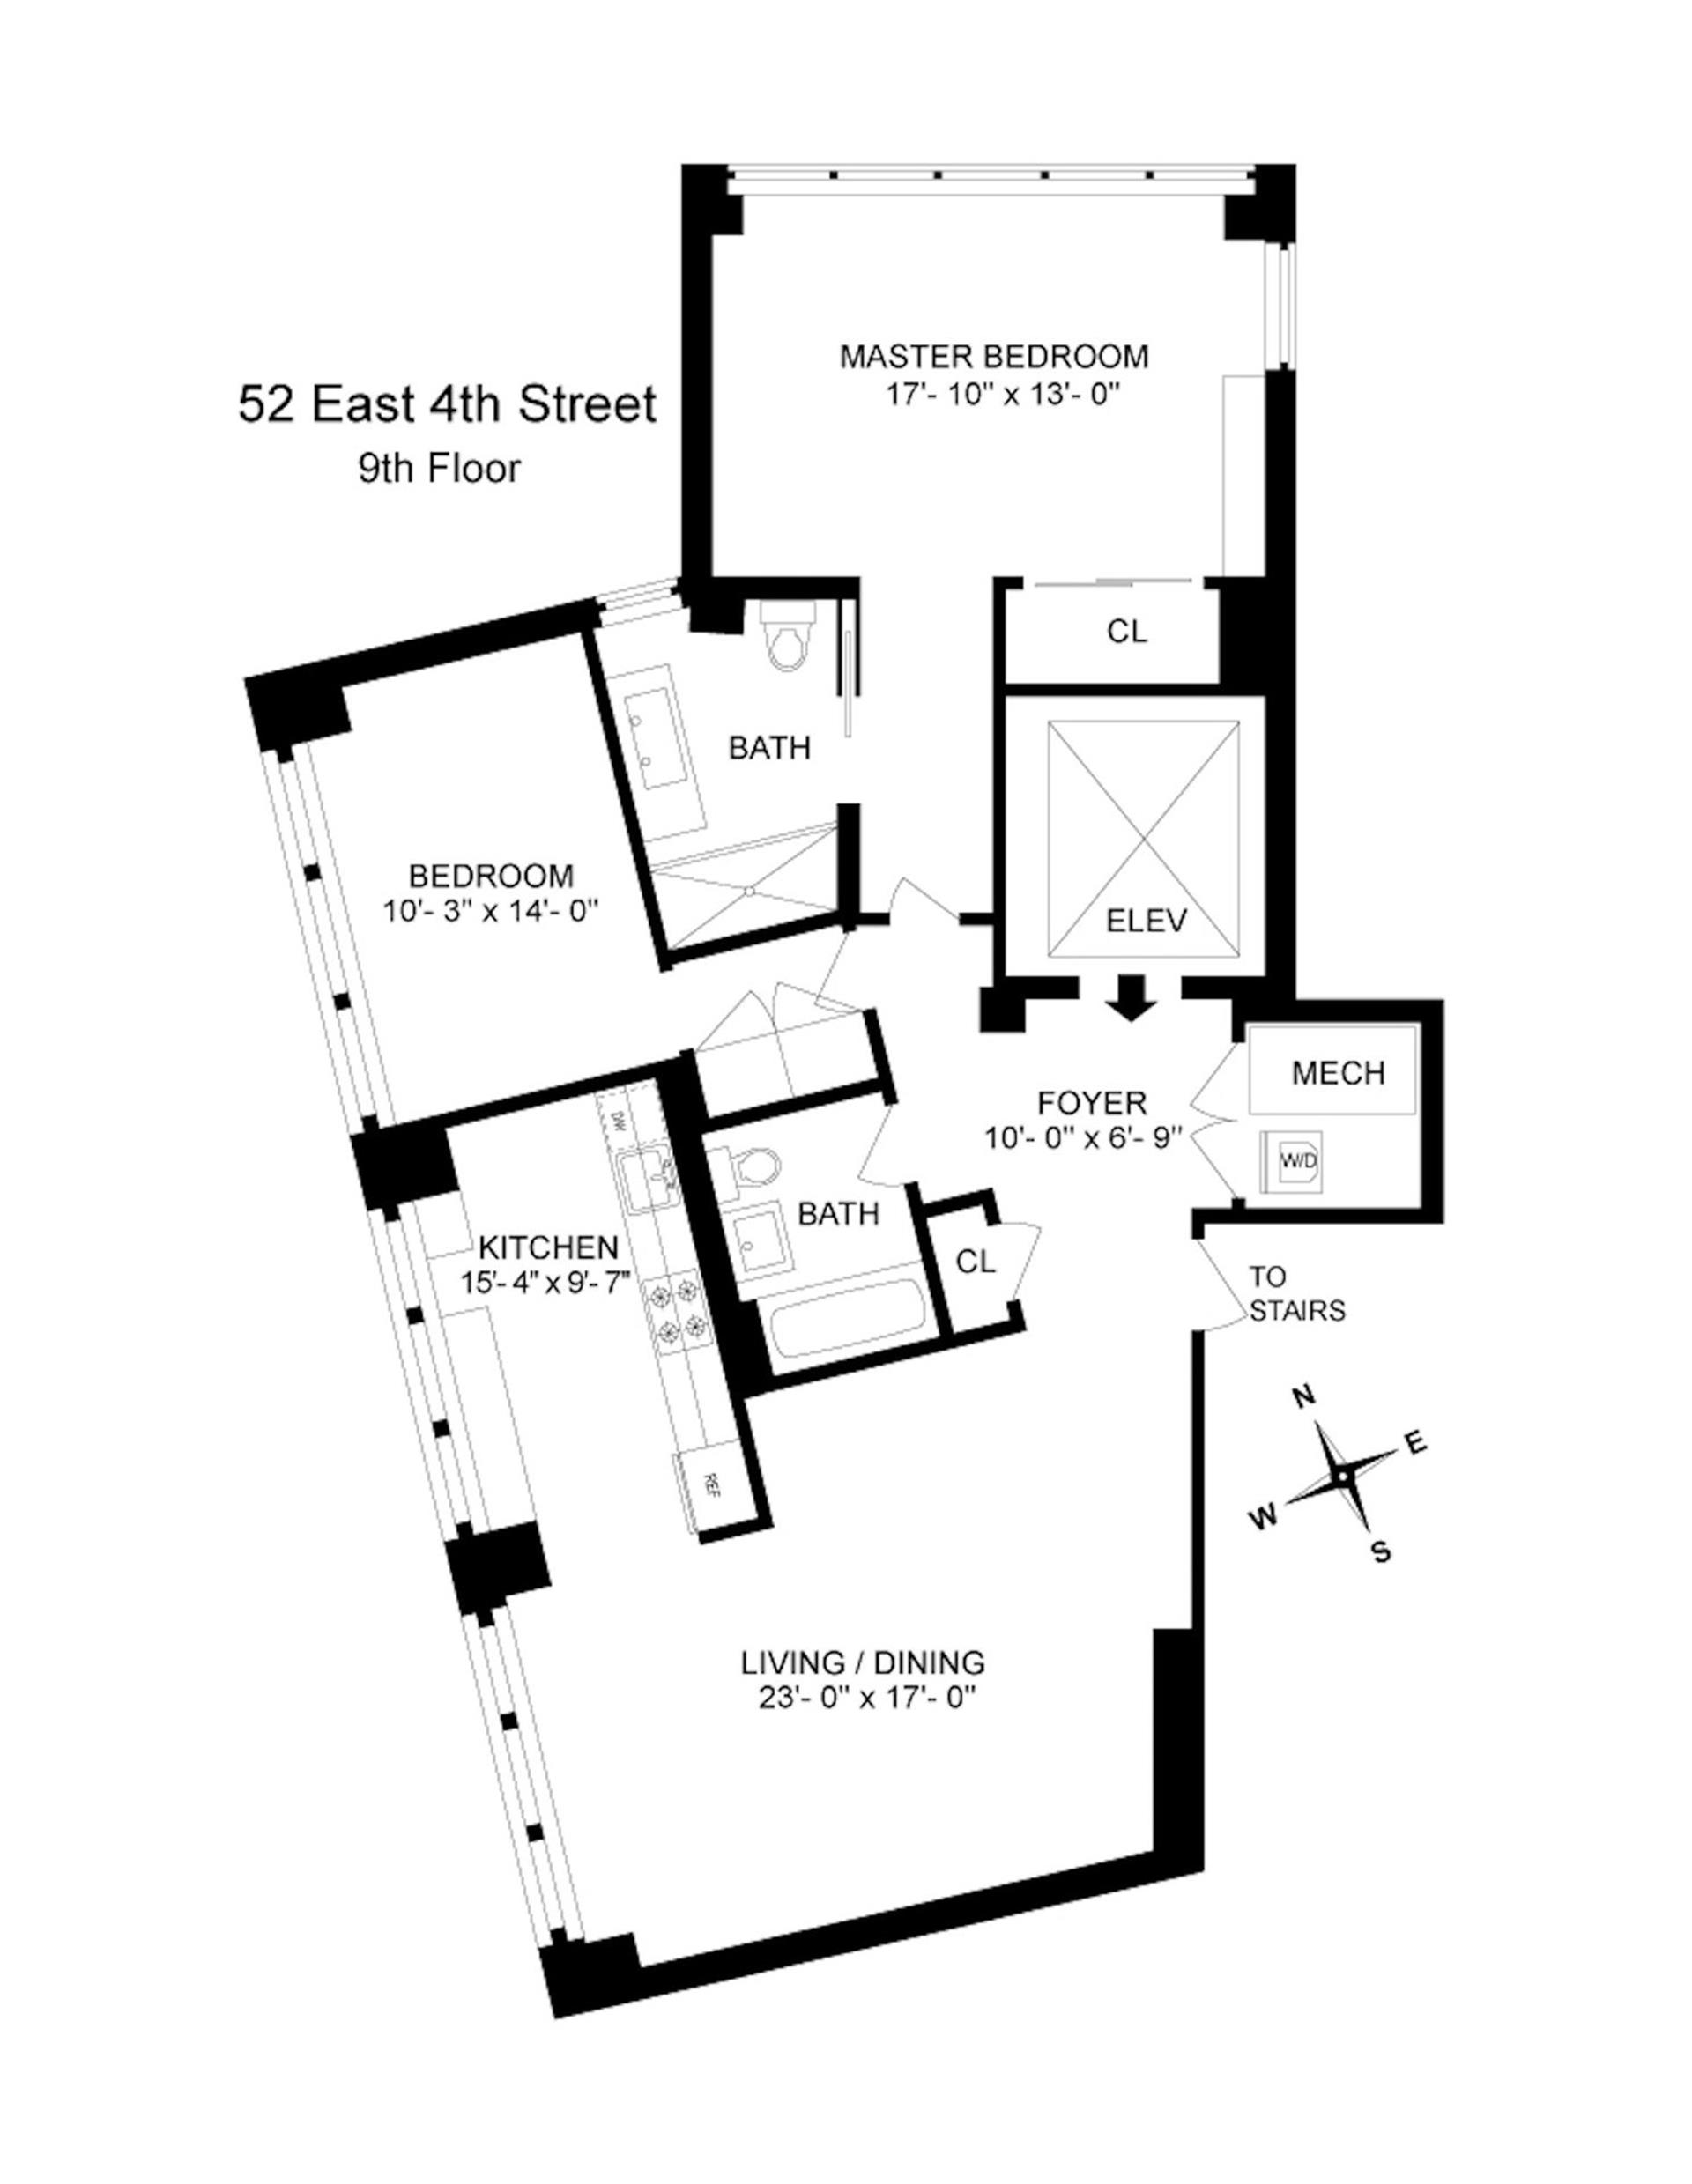 Floorplan for 52 East 4th Street, 9